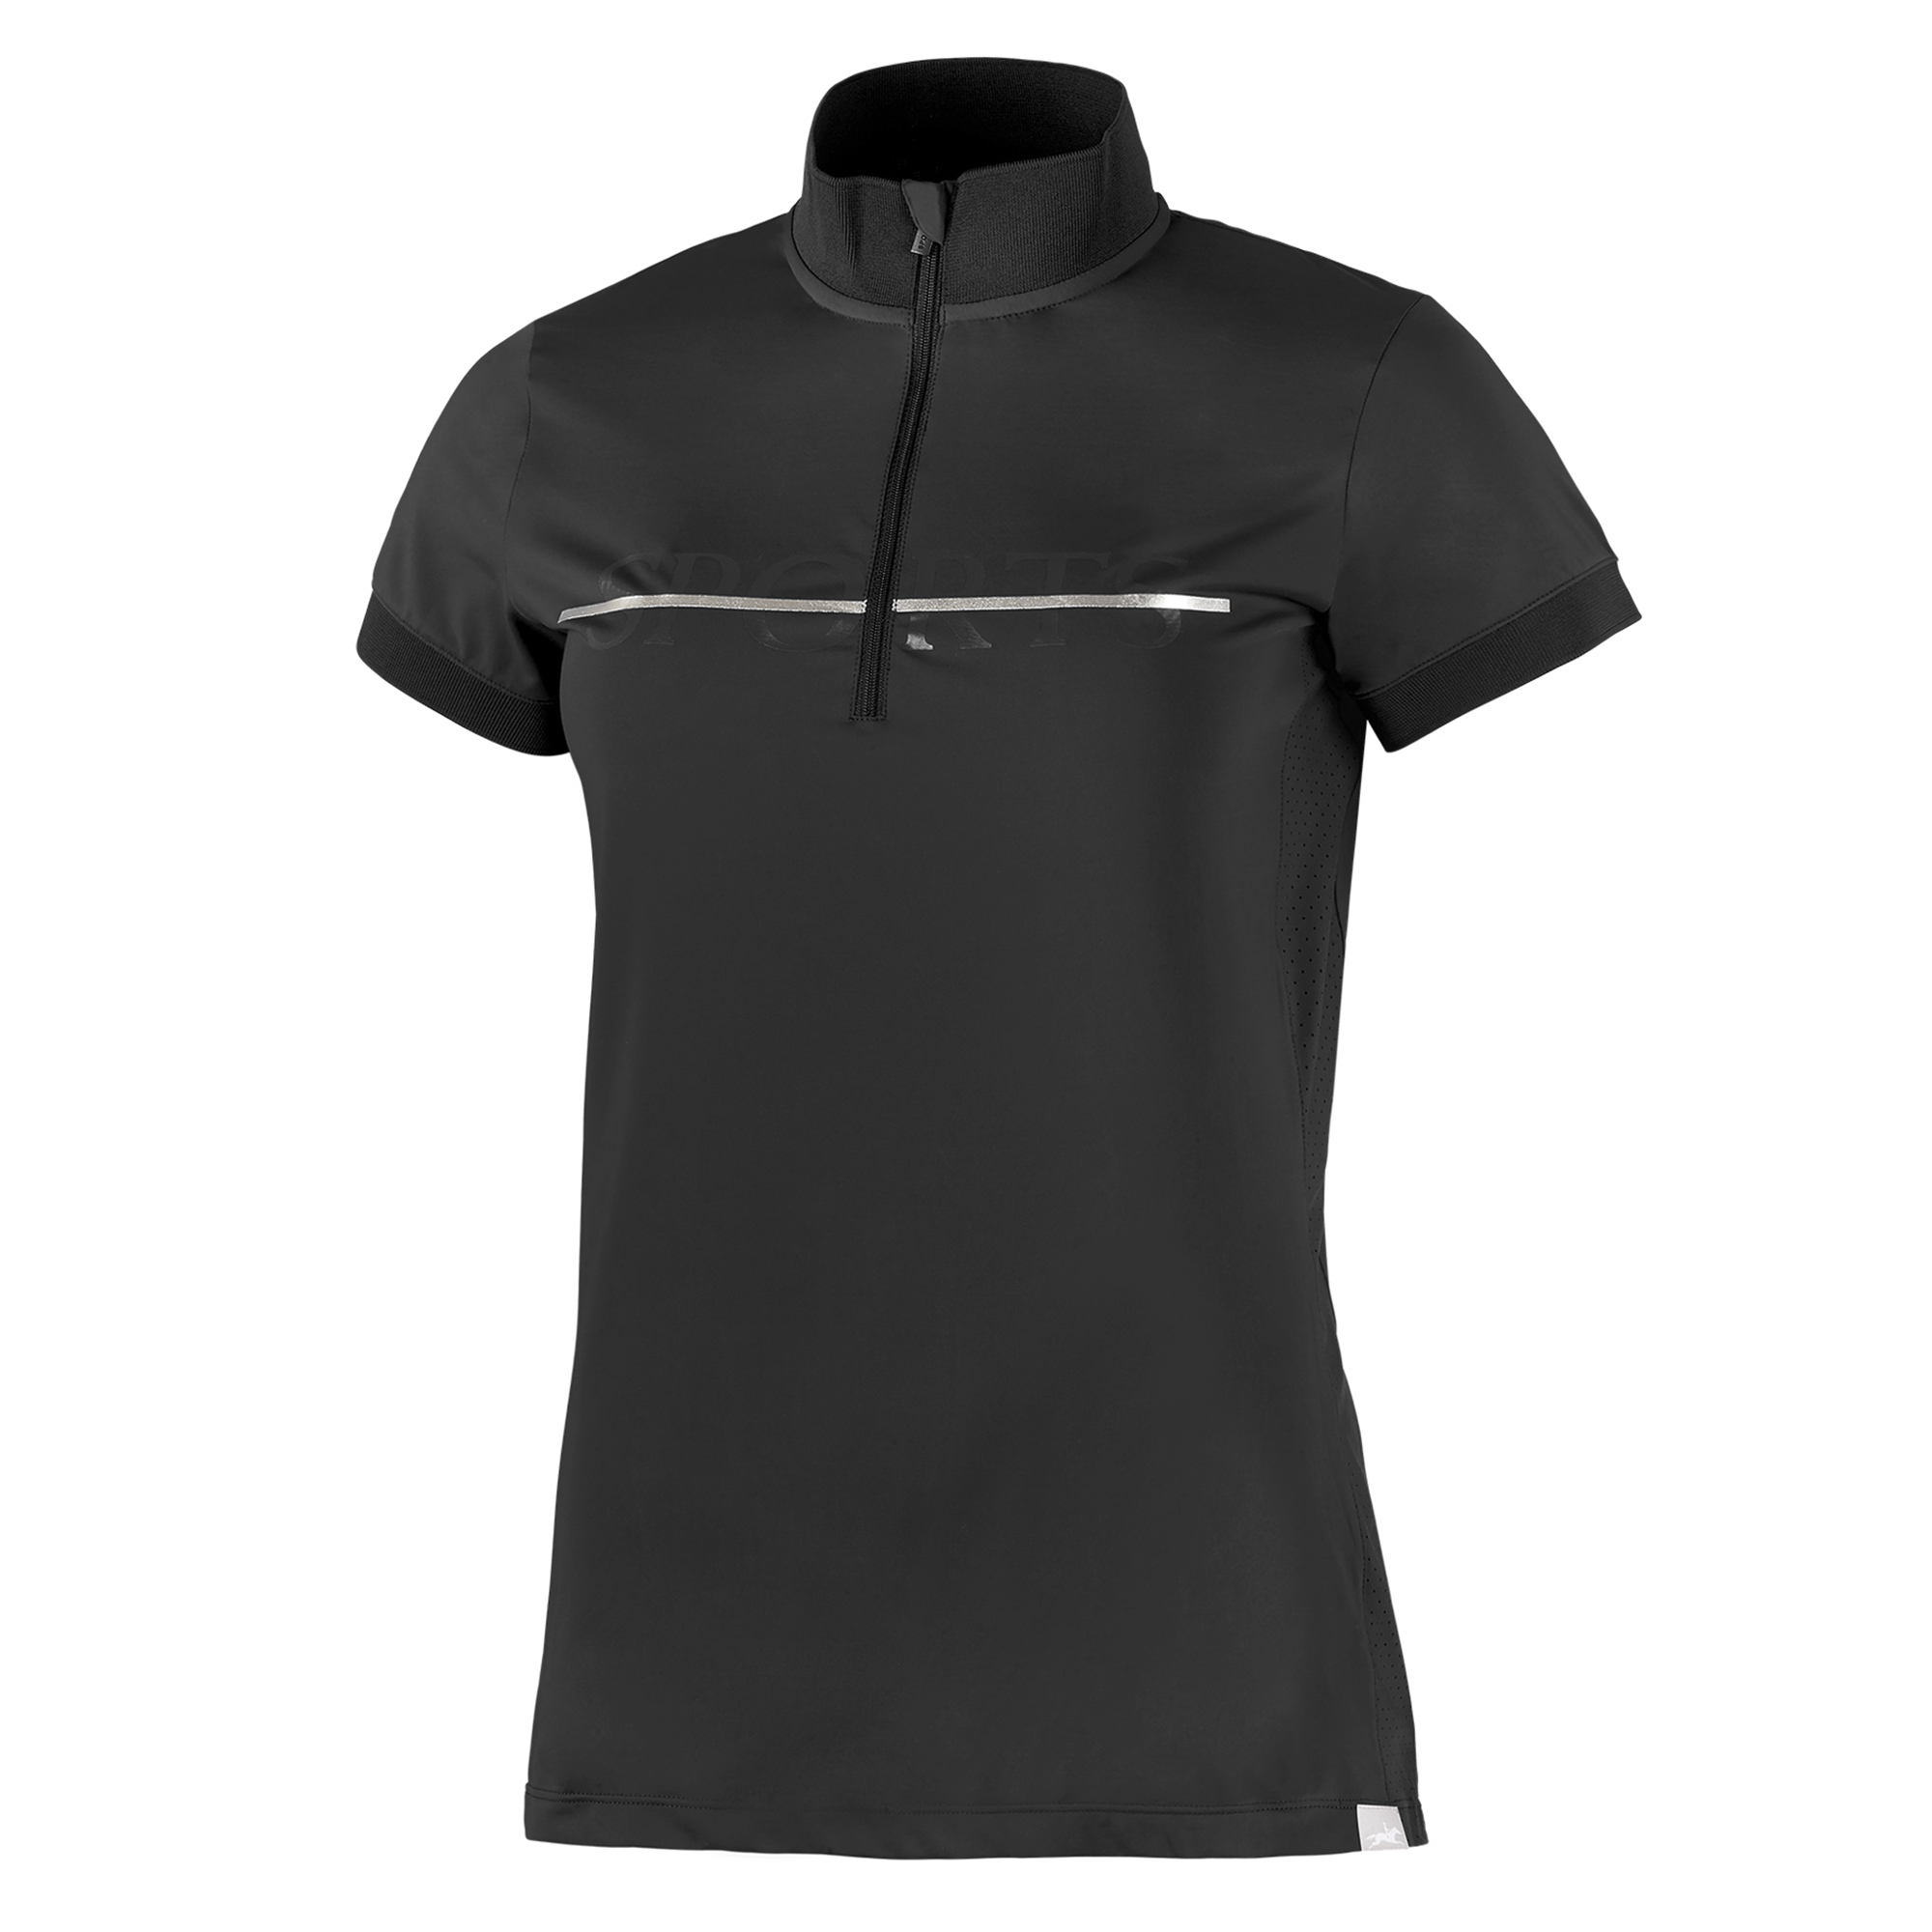 Schockemohle FORTUNA Ladies Short Sleeve Training Shirt, Cool Black